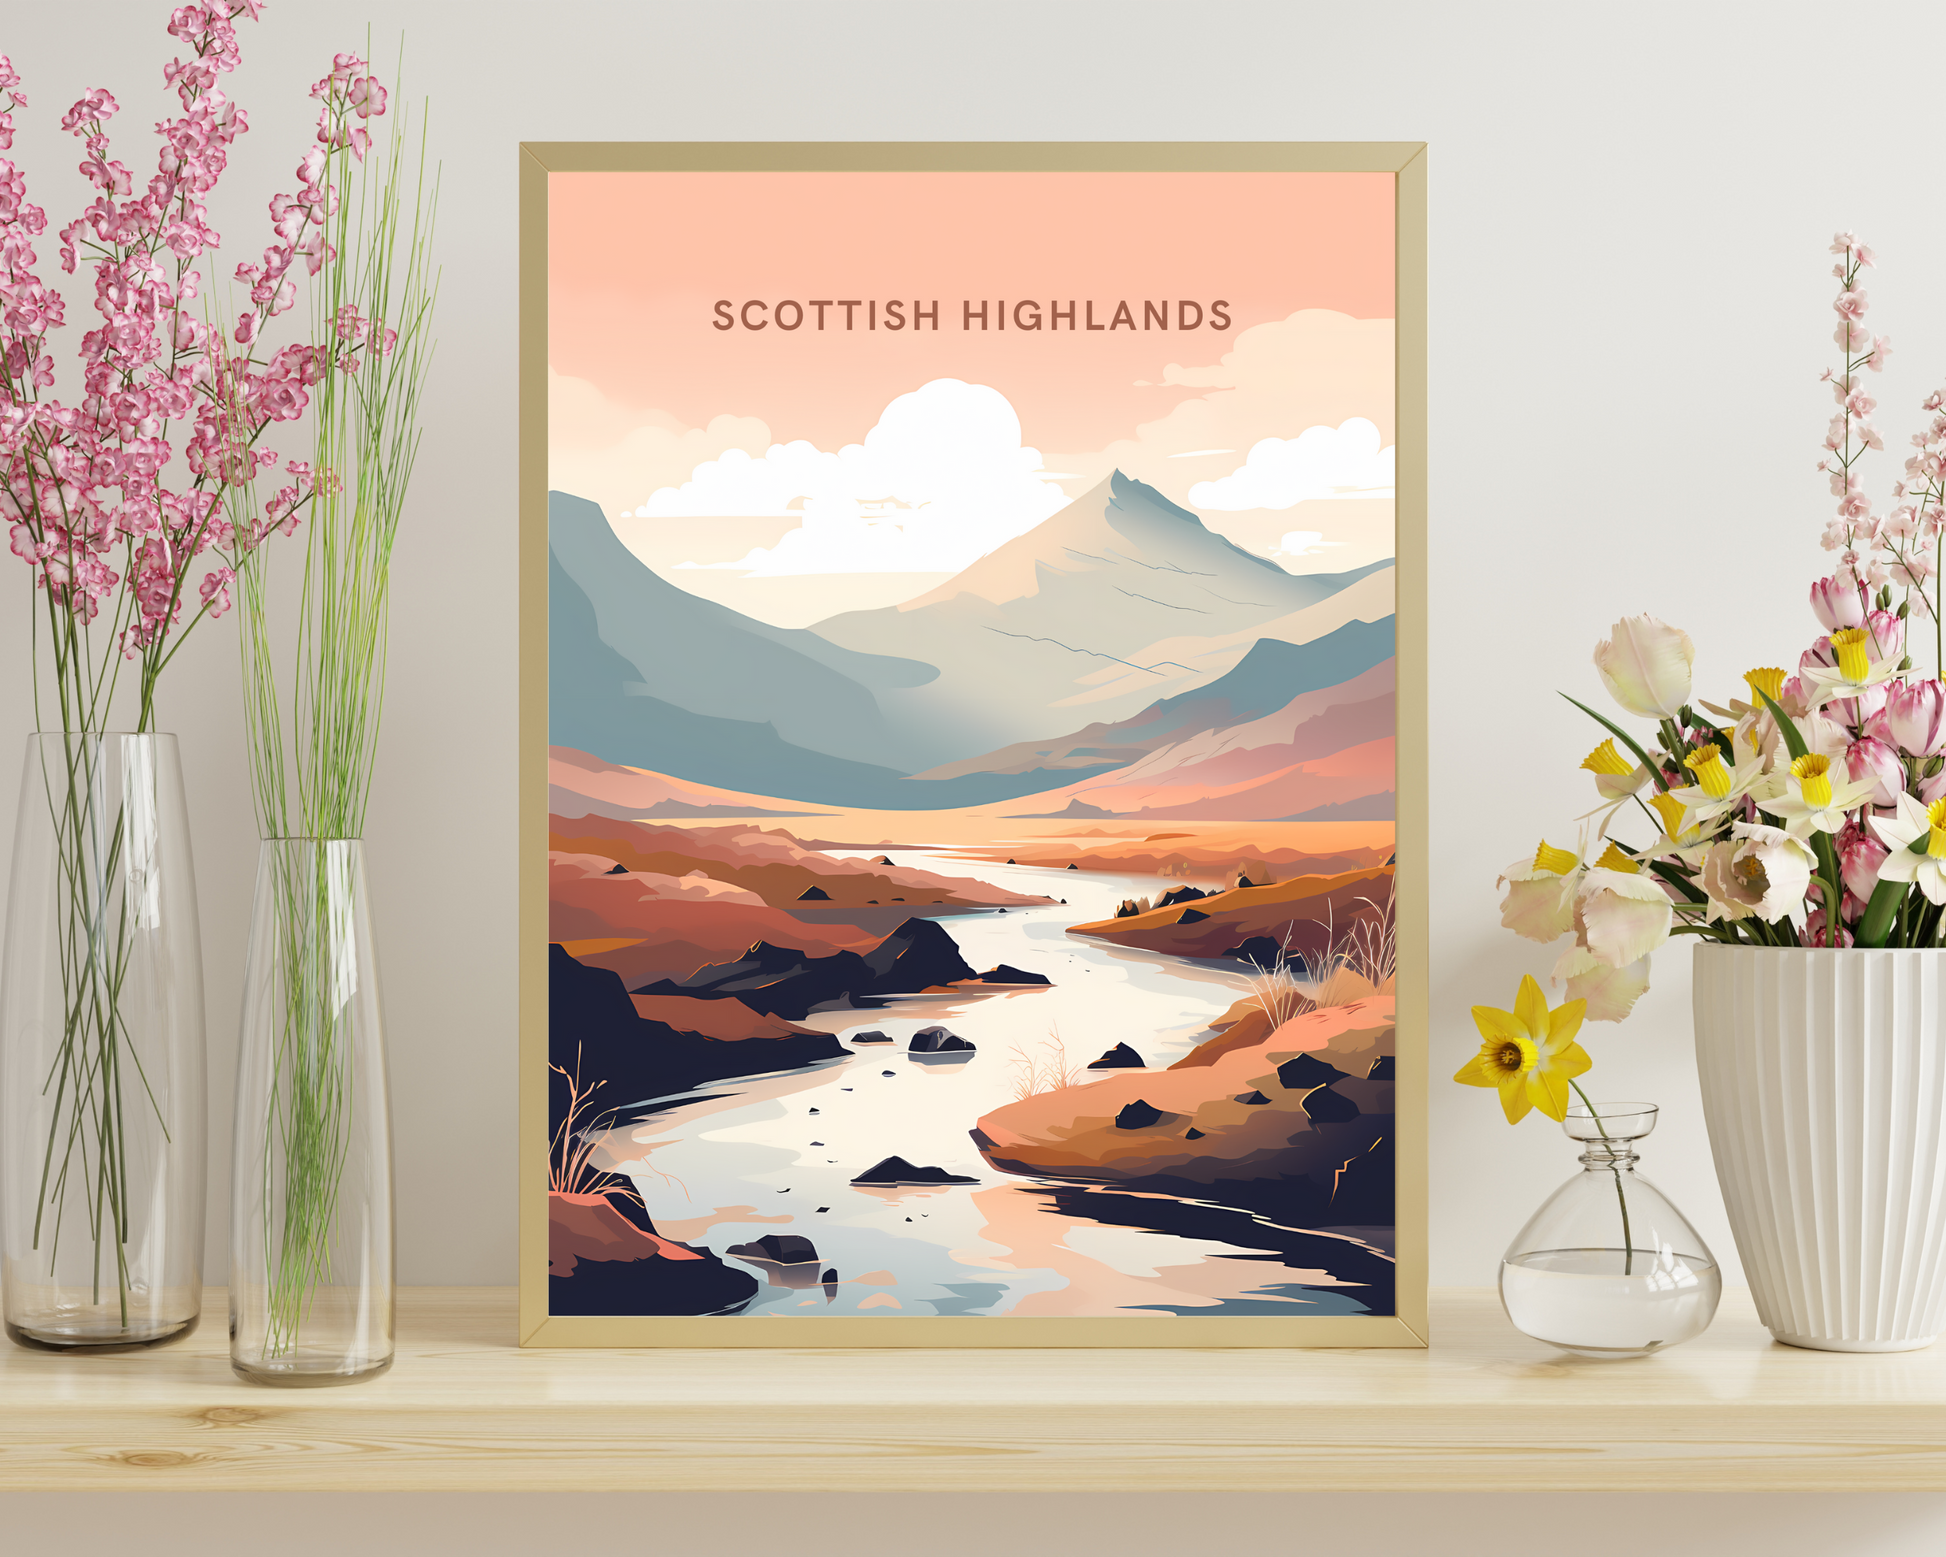 Scottish Highlands Scotland Travel Poster Print - Pitchers Design